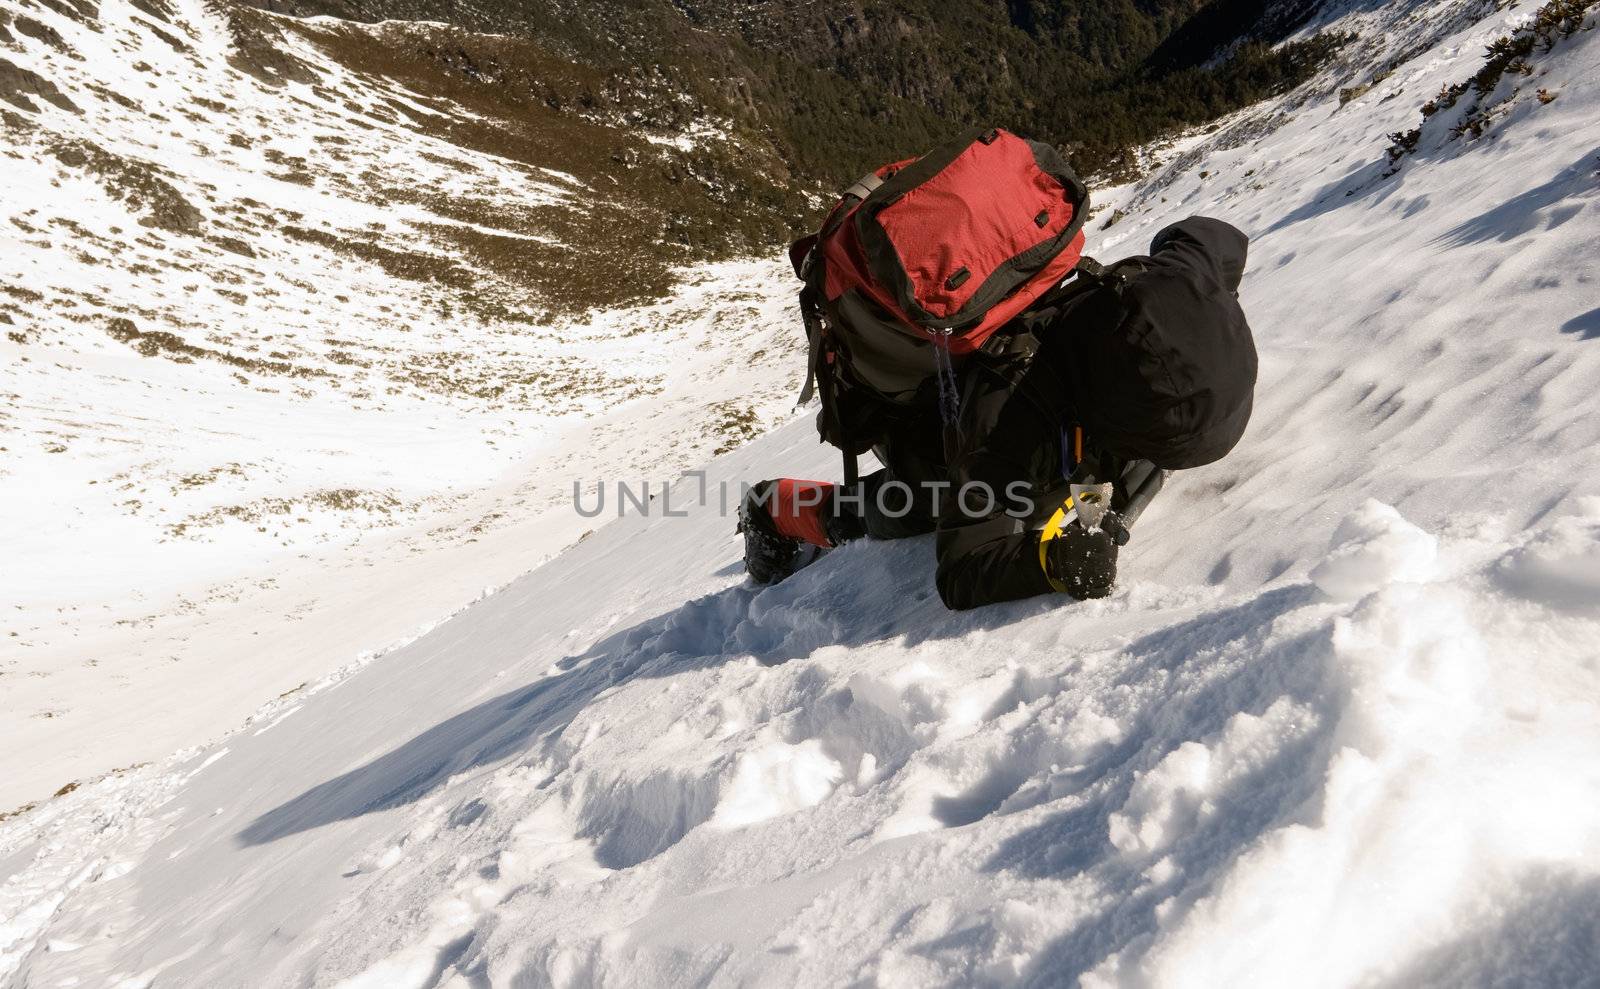 Mountaineer climb on dangerous snow slap of mountain.